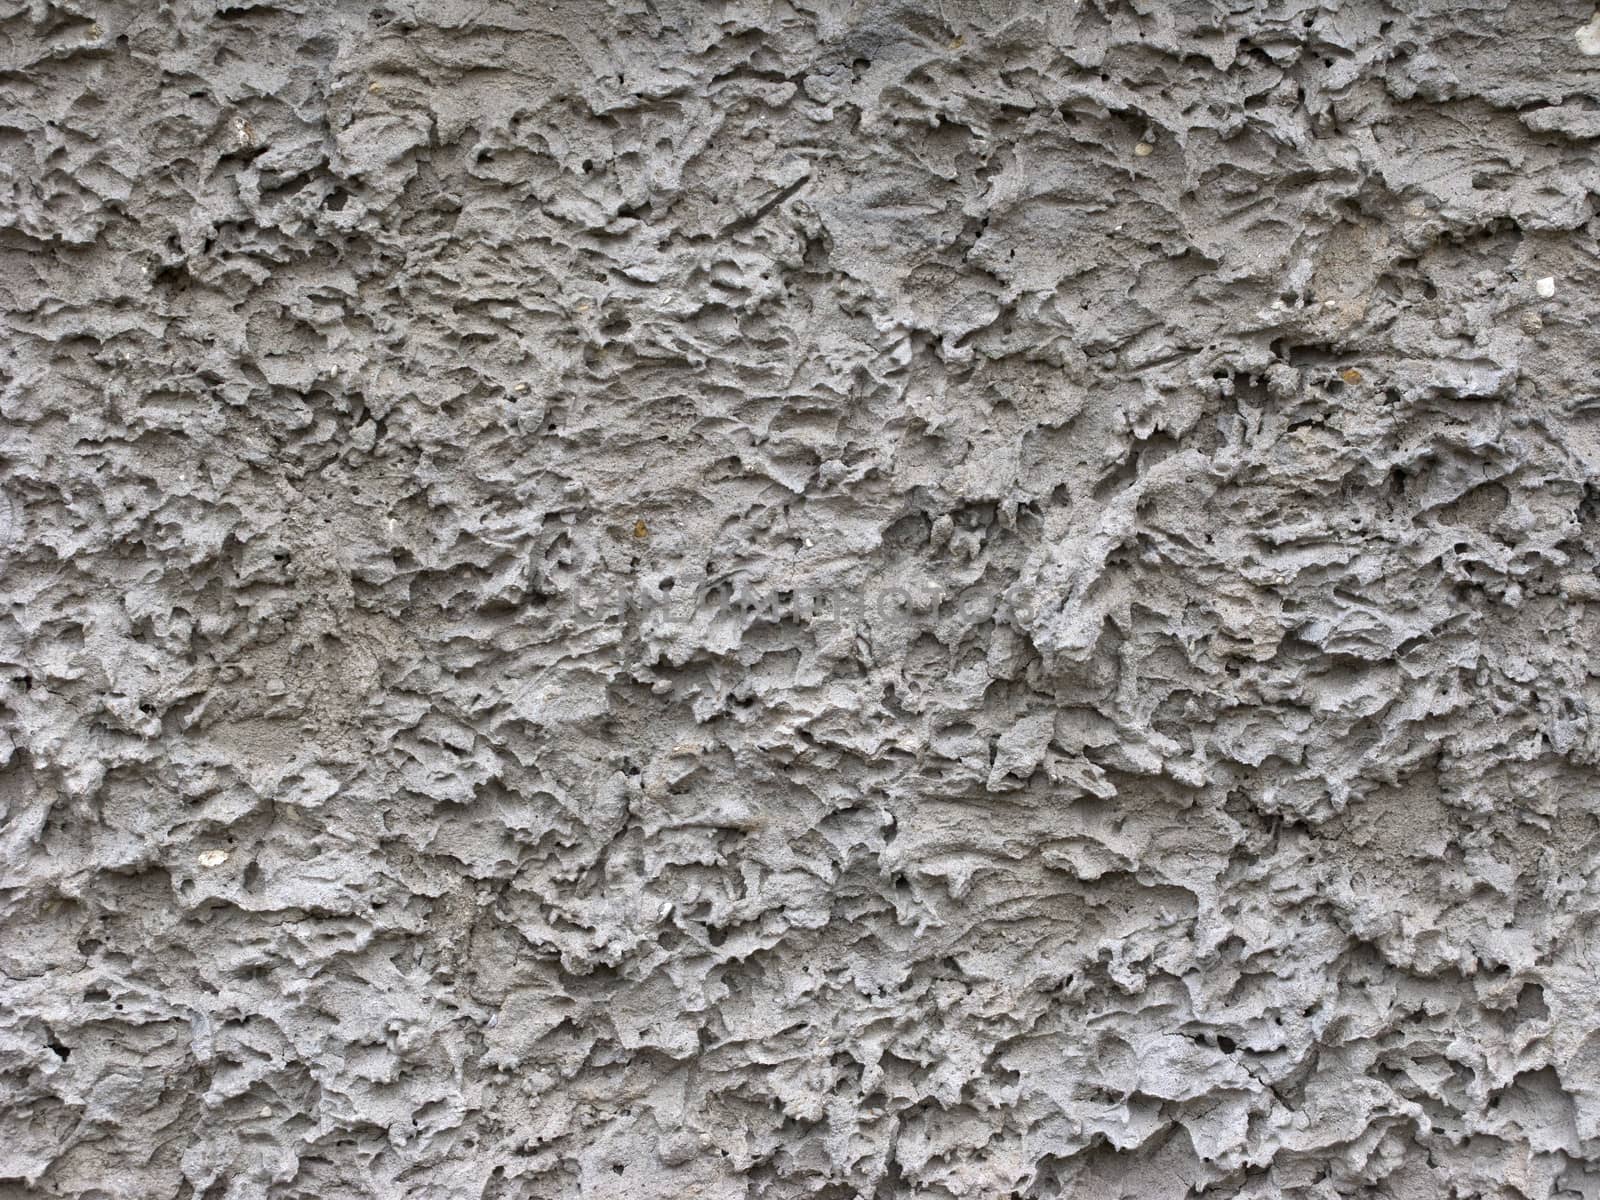 Close up of rough gray concrete surface